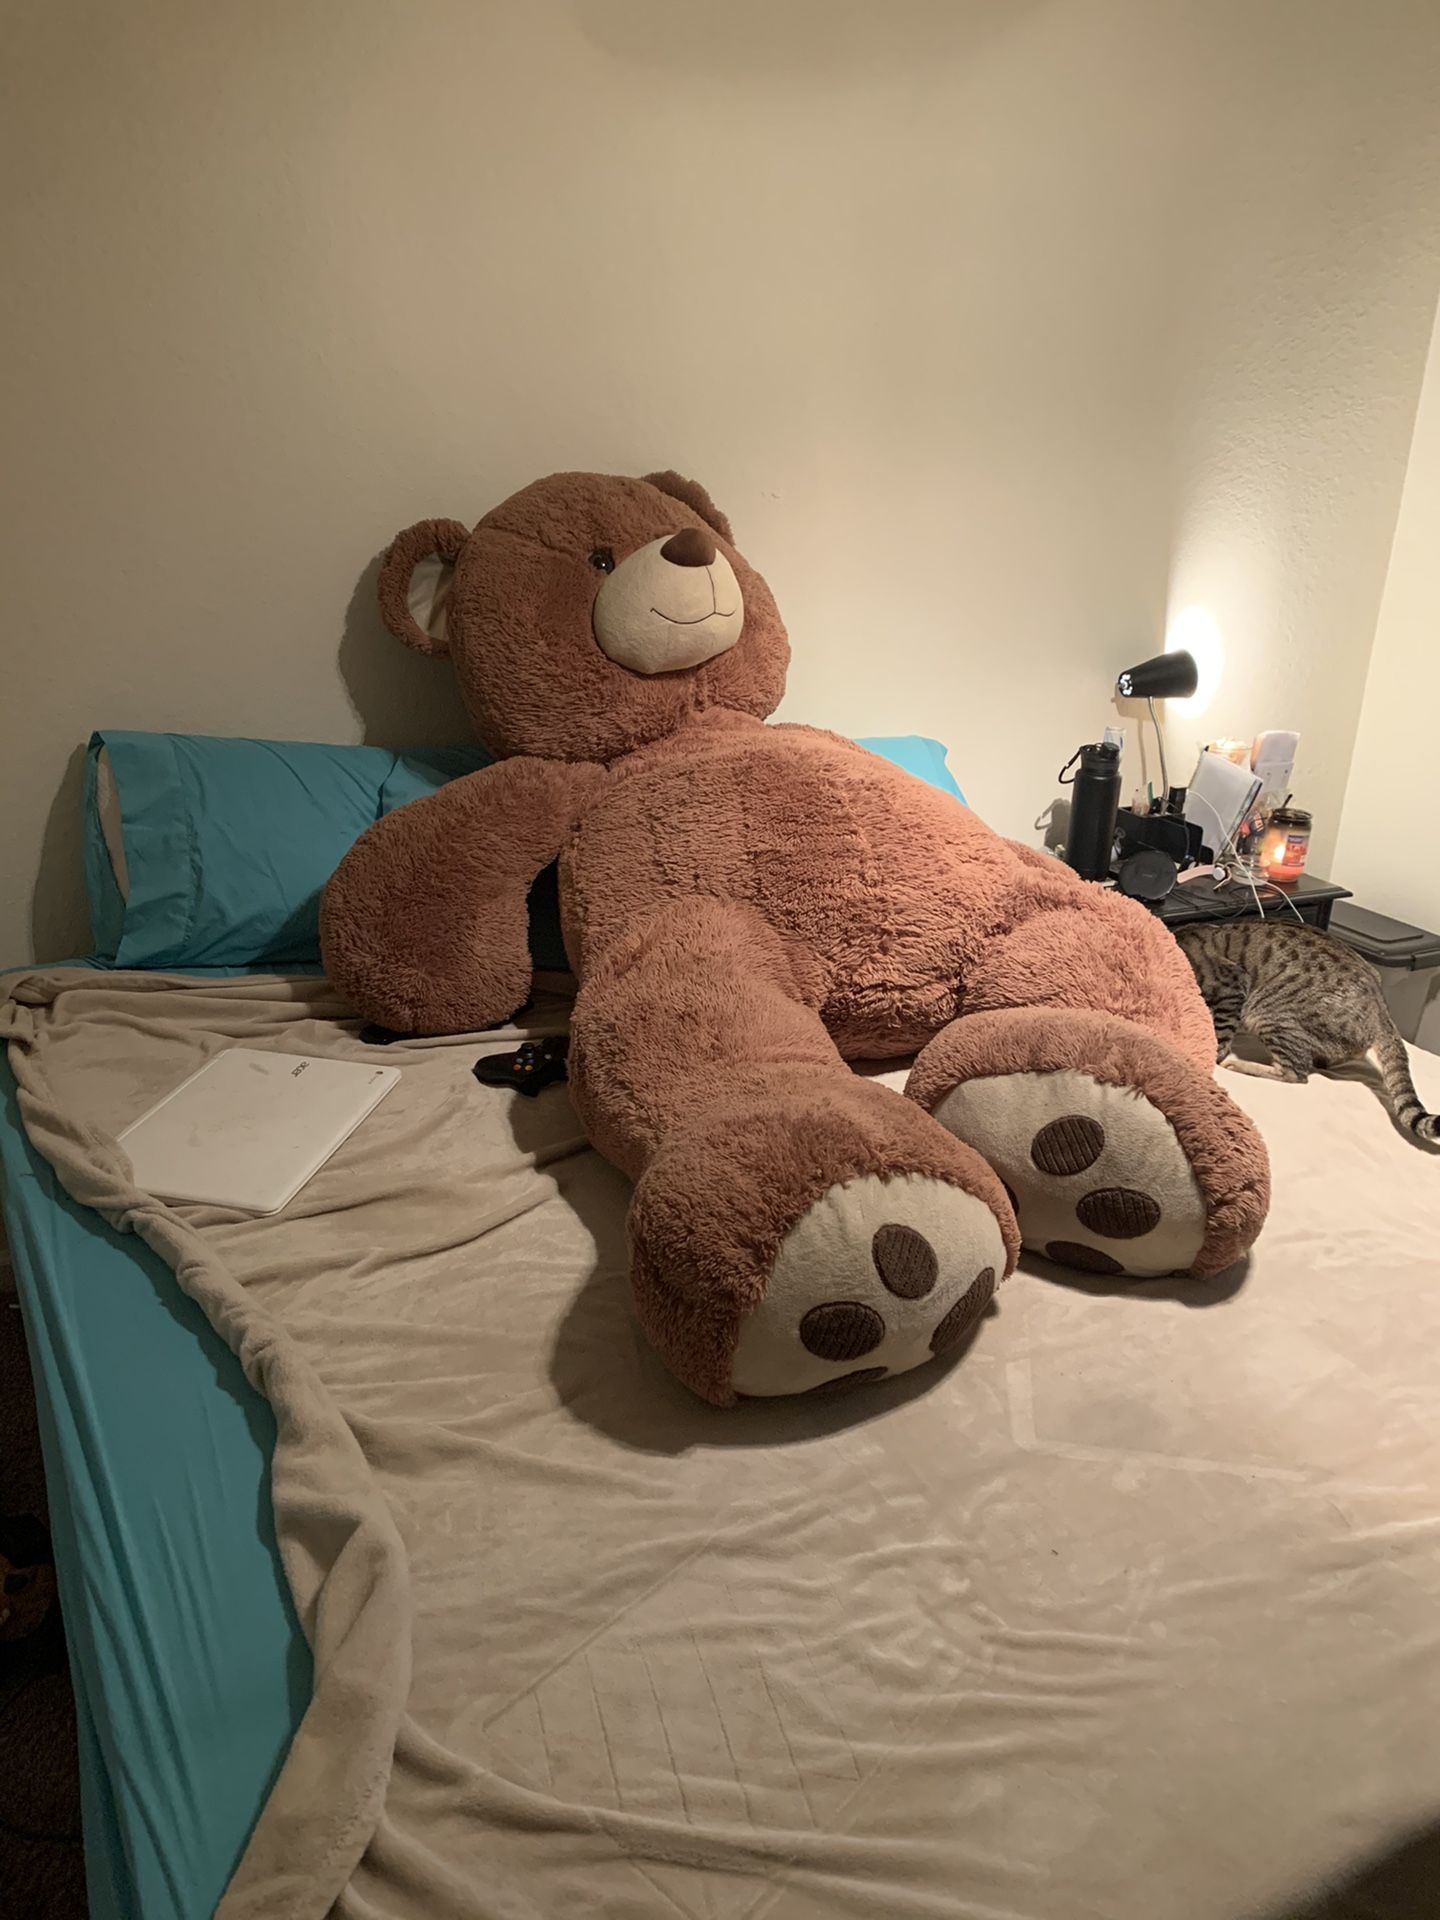 Giant stuffed bear